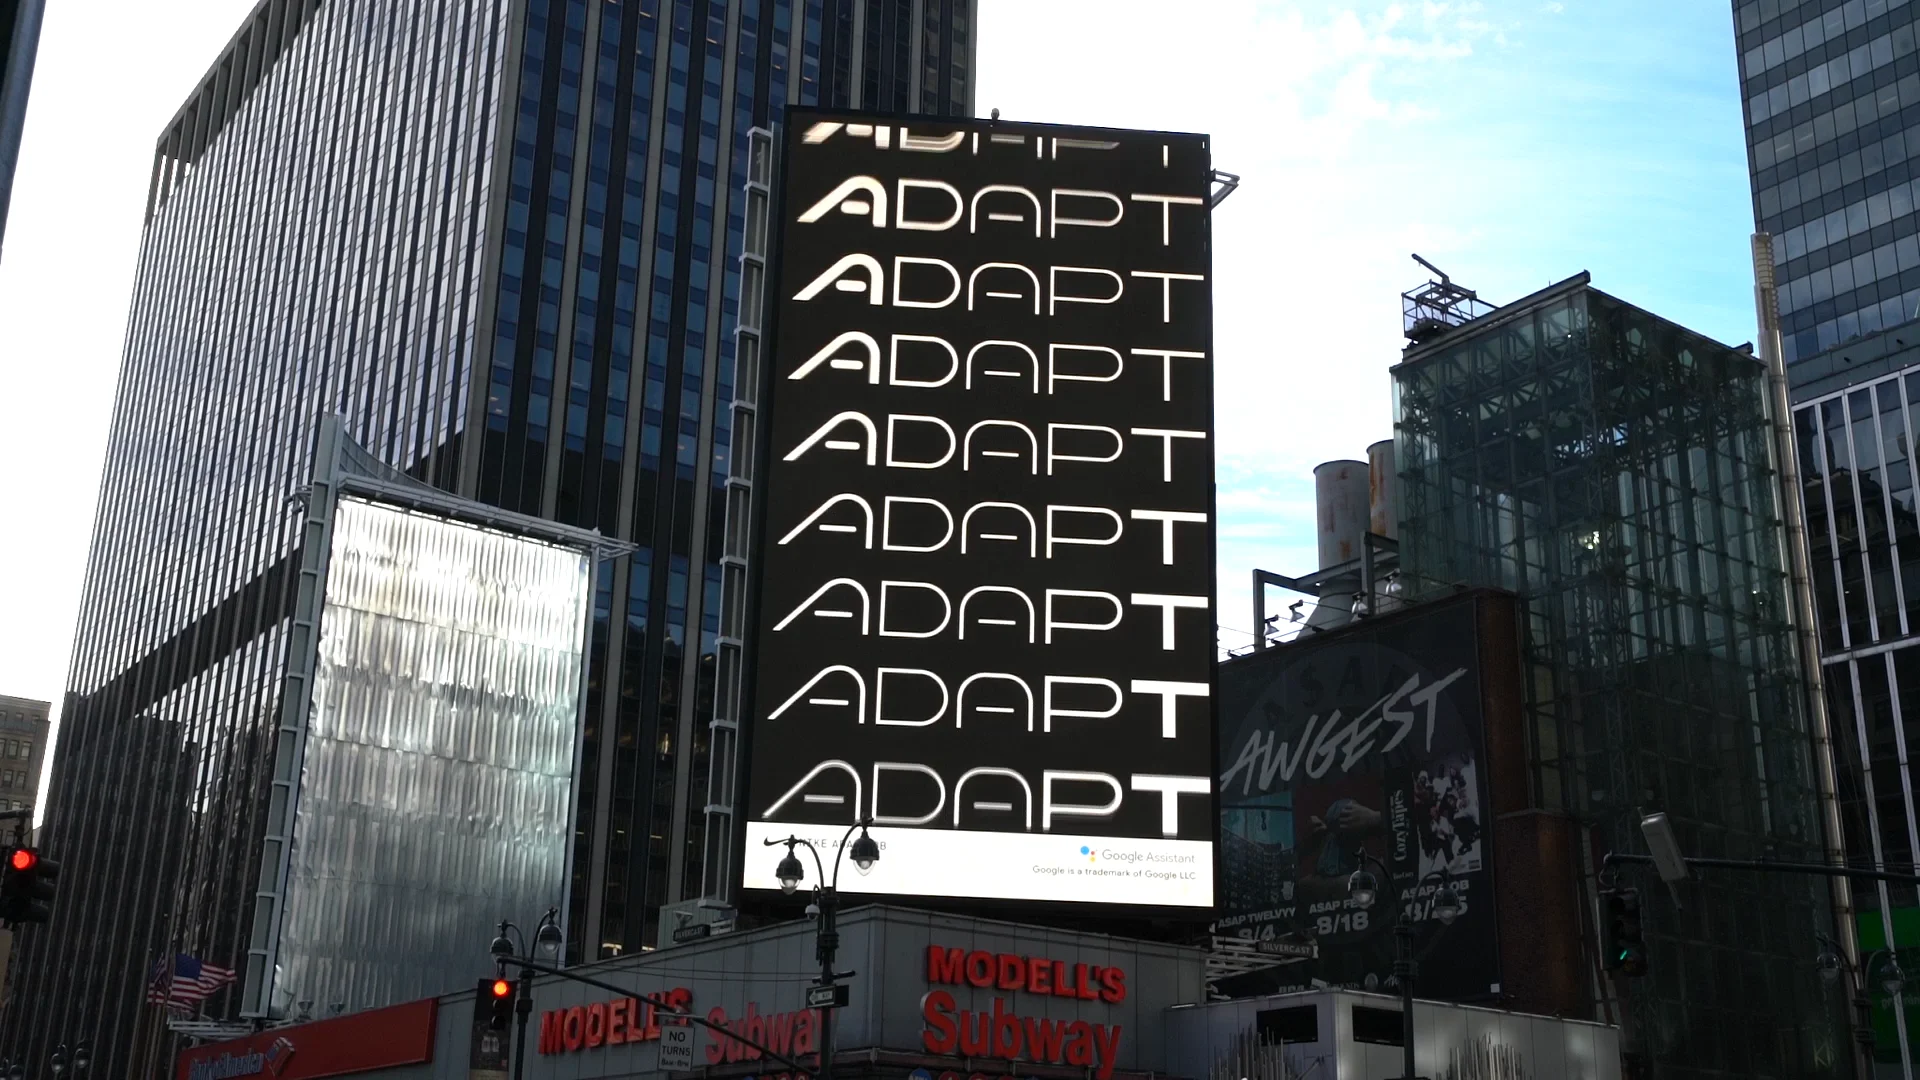 Nike x Louis Vuitton billboard in NYC #foryou #fyp #eandjbillboards #3